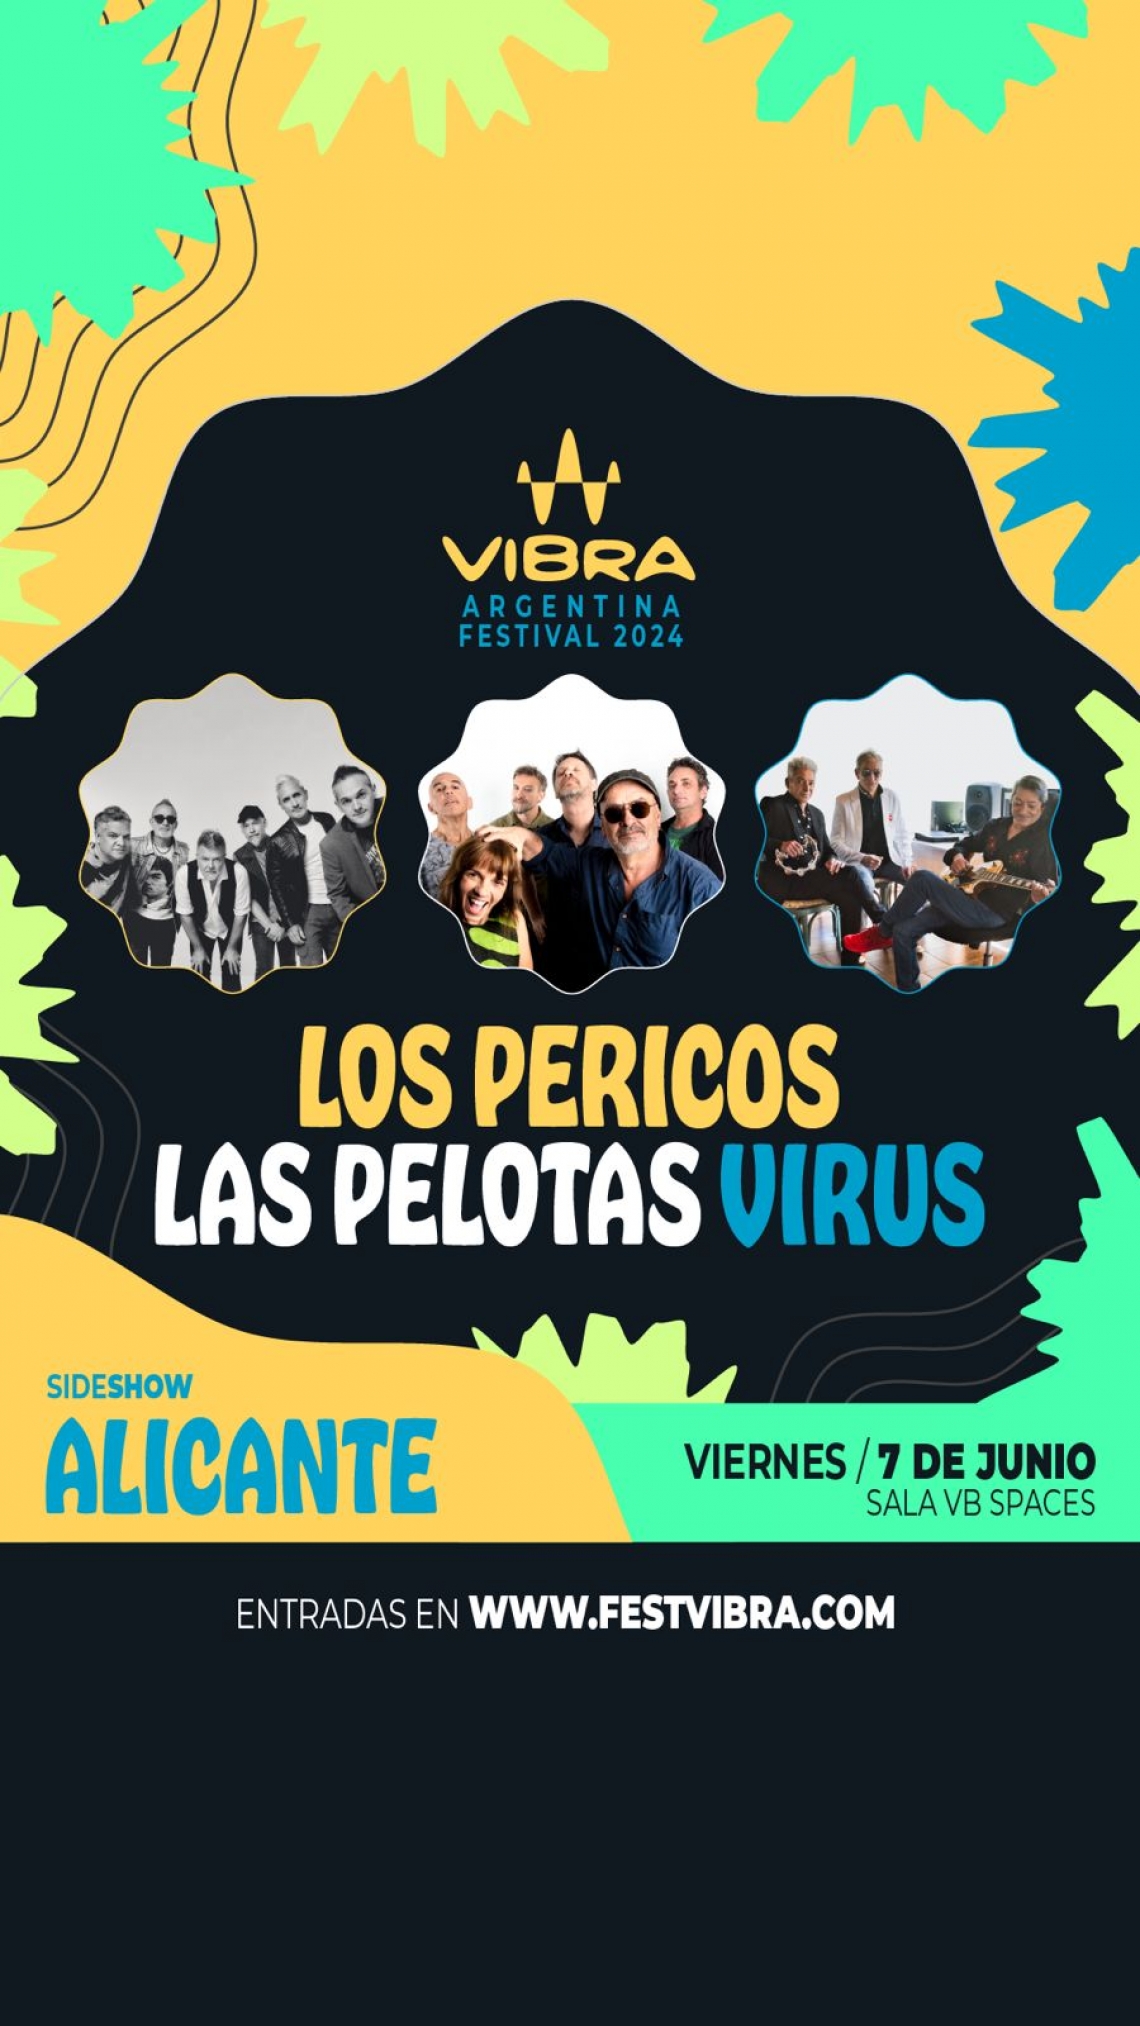 VIBRA Argentina Festival - Los Pericos / Las Pelotas / Virus